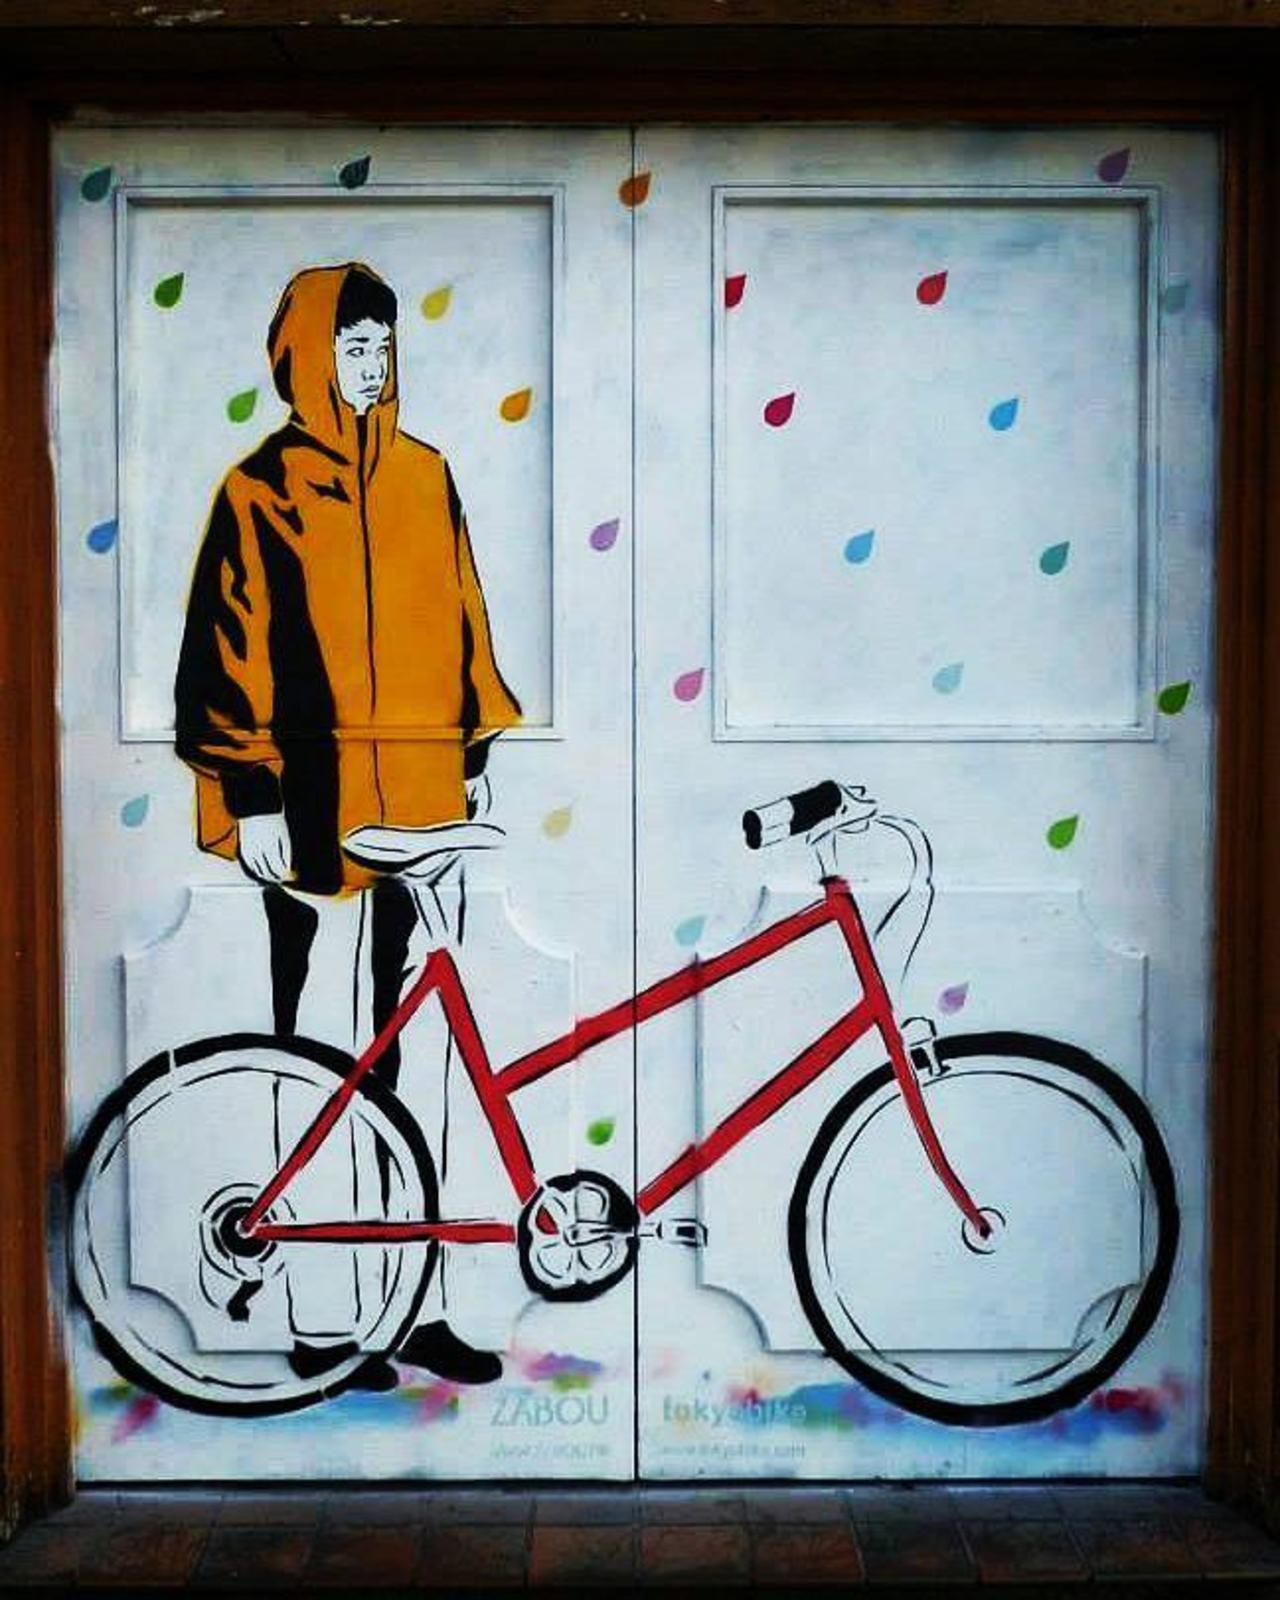 #zabouartist #streetart #art #graffiti #wallart #urbanart #zabou #londonstreetart #paris #streetartlondon #streetar… https://t.co/EyRrnLWgmY